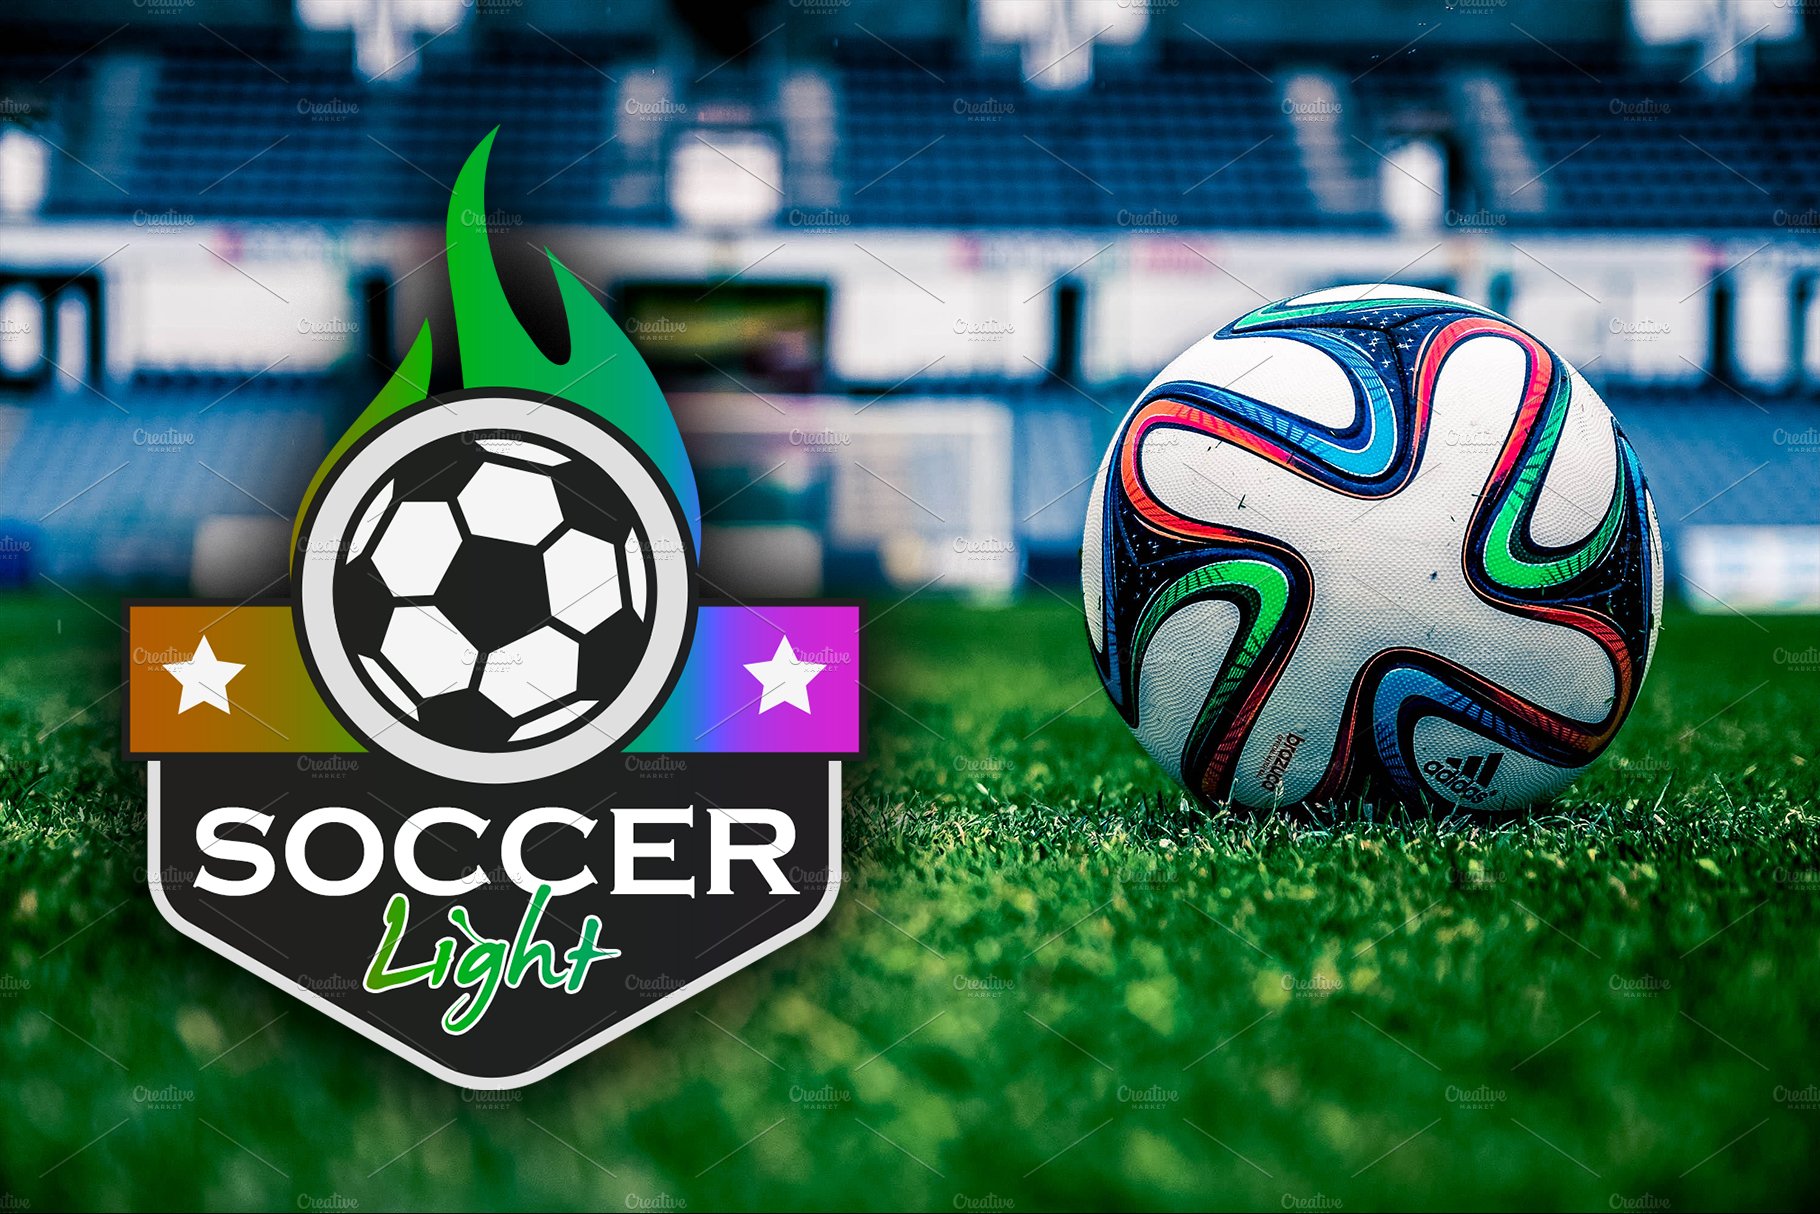 SoccerLight - 60 Lightroom Presetscover image.